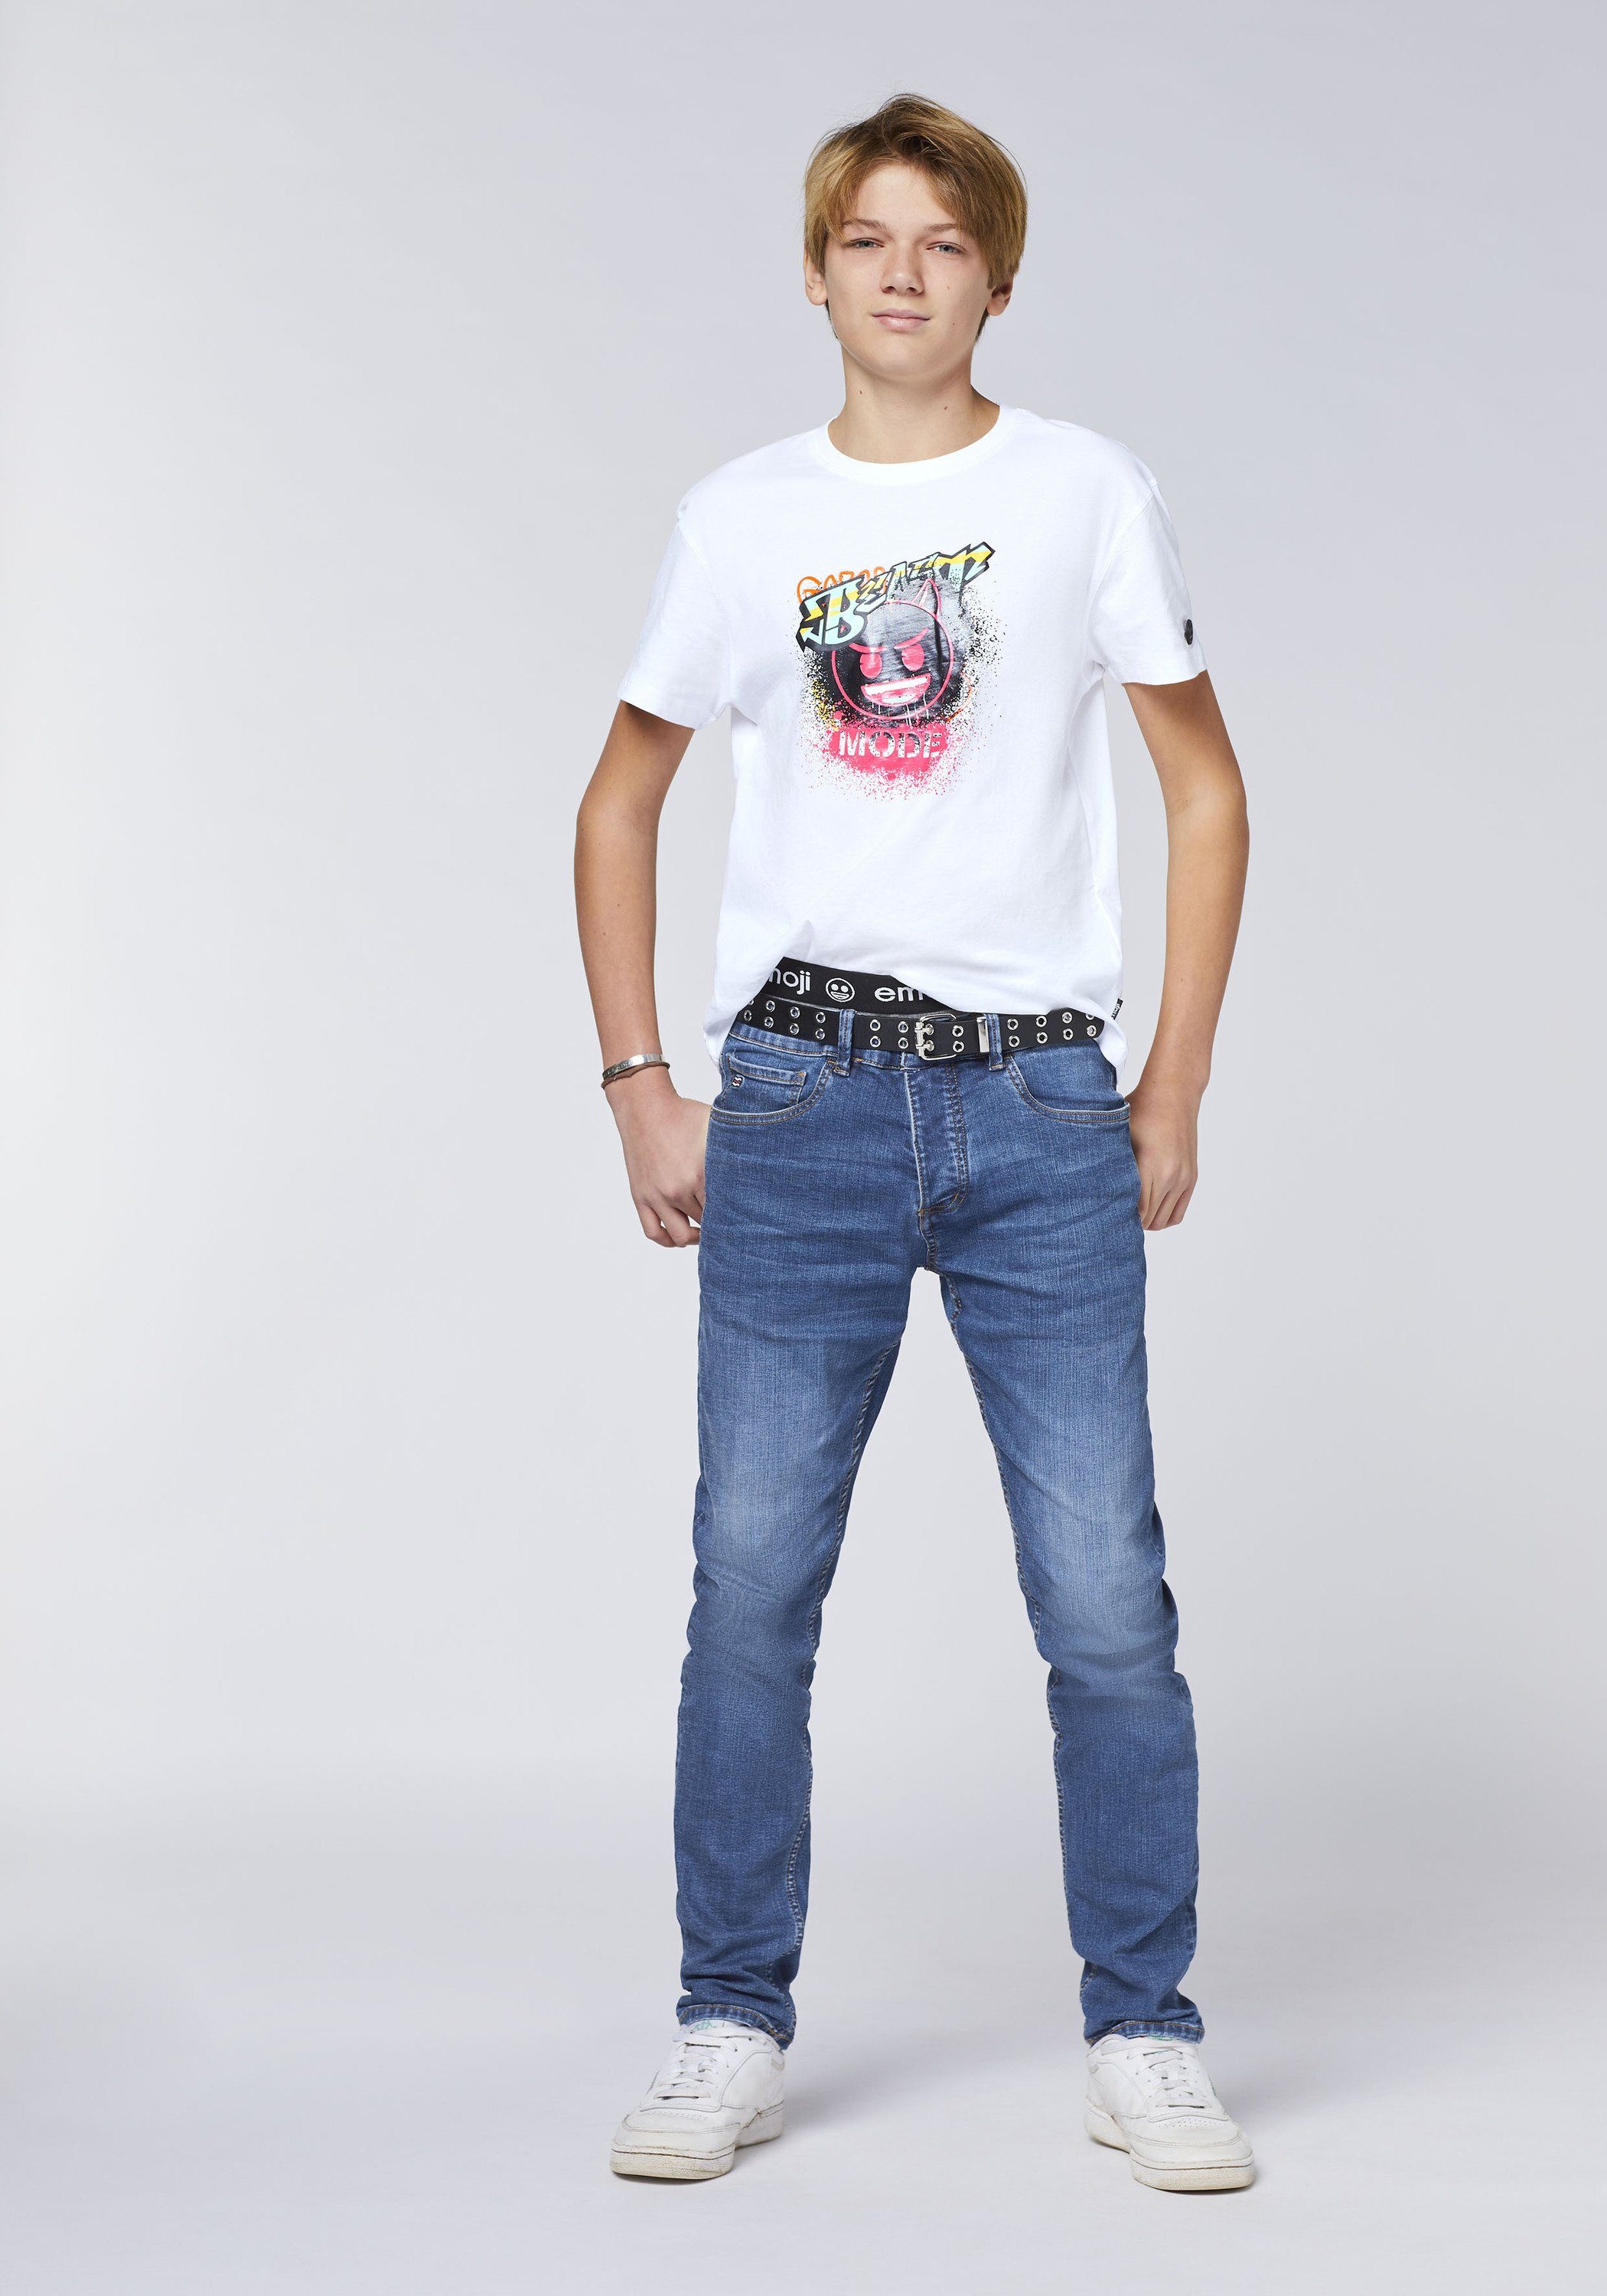 Emoji Print-Shirt mit "Beast Mode" Print